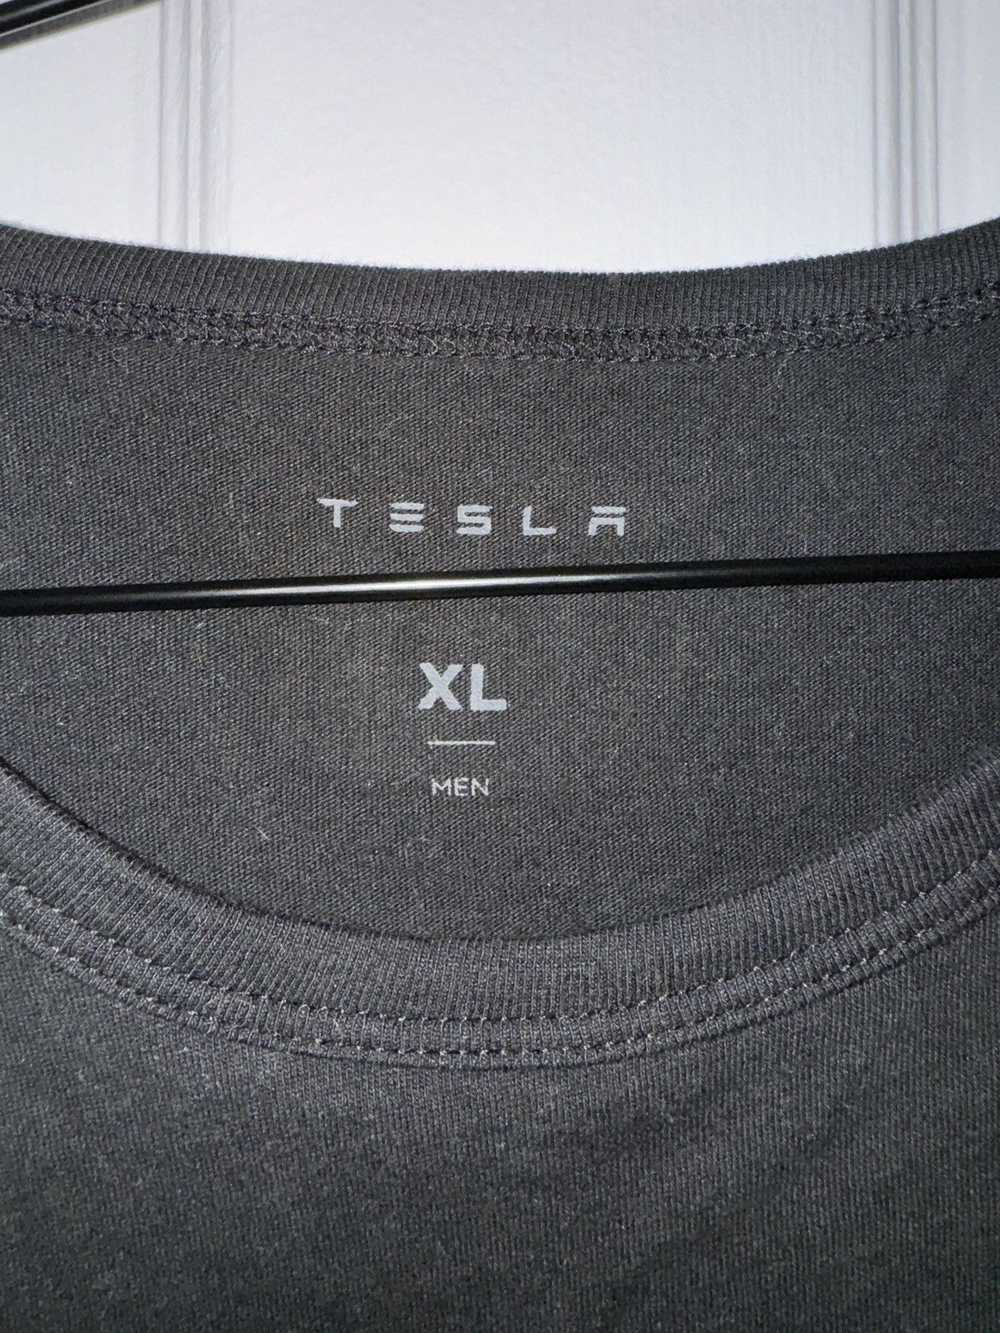 Tesla Tesla Model S Plaid T-Shirt - image 4